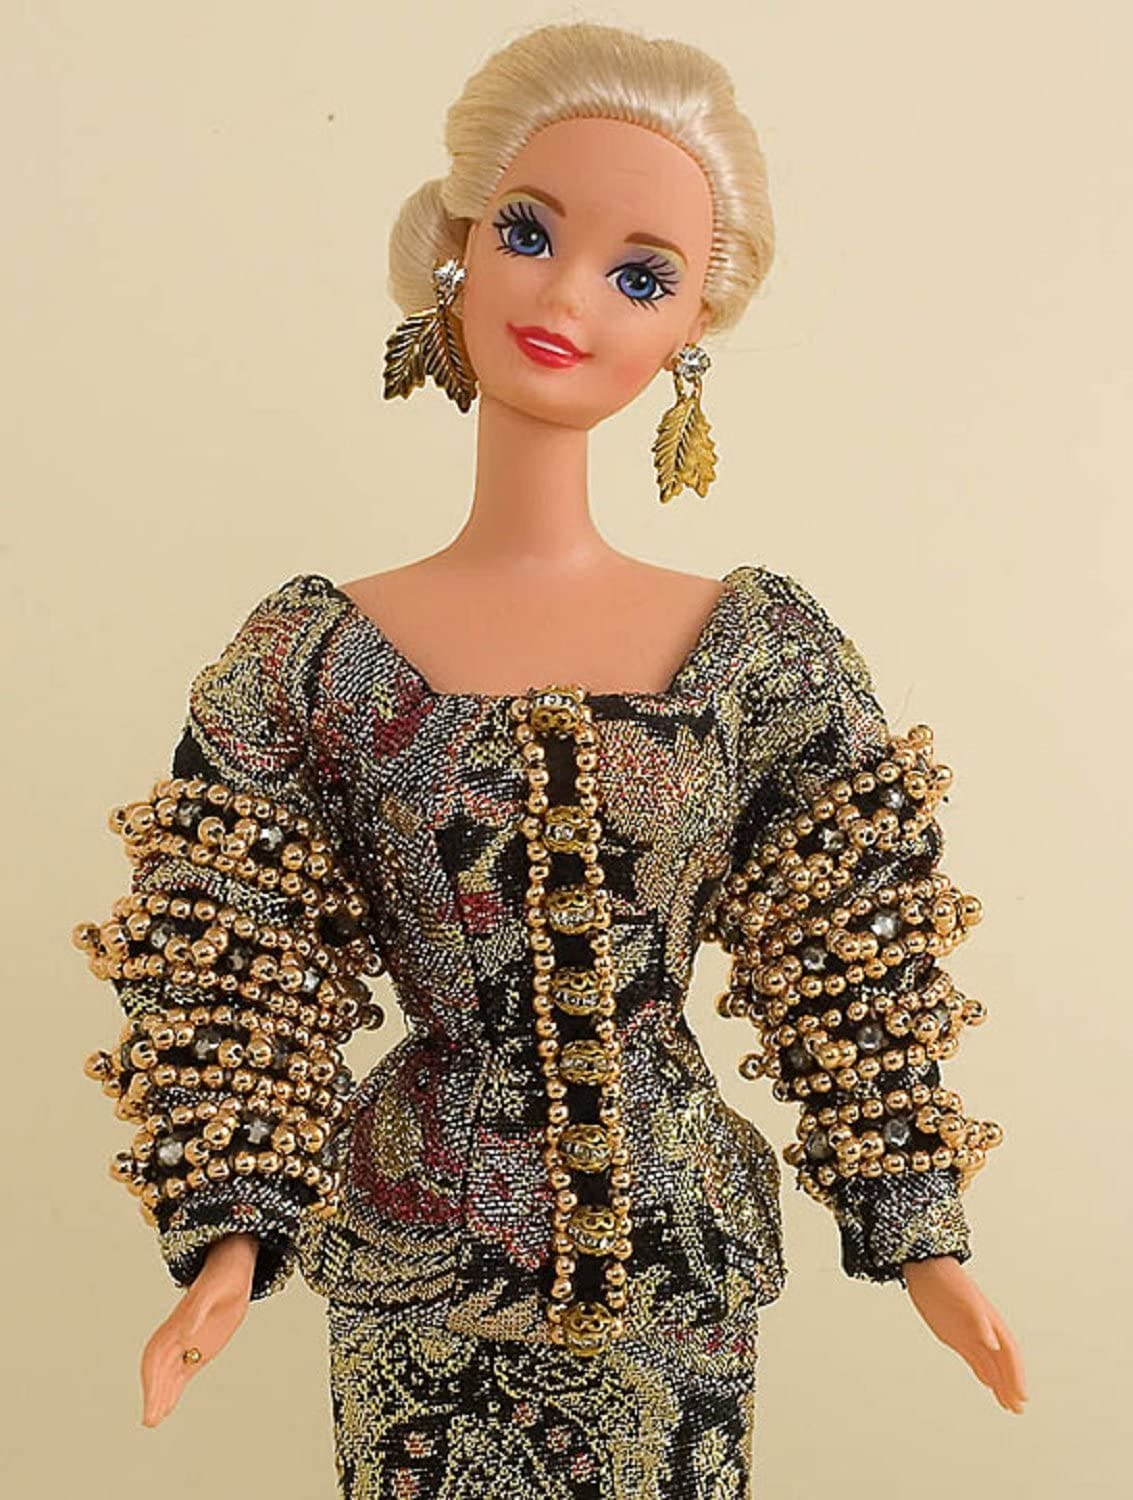 Reserve Elaborate Otherwise Christian Dior Barbie® Doll - Susans Shop of Dolls